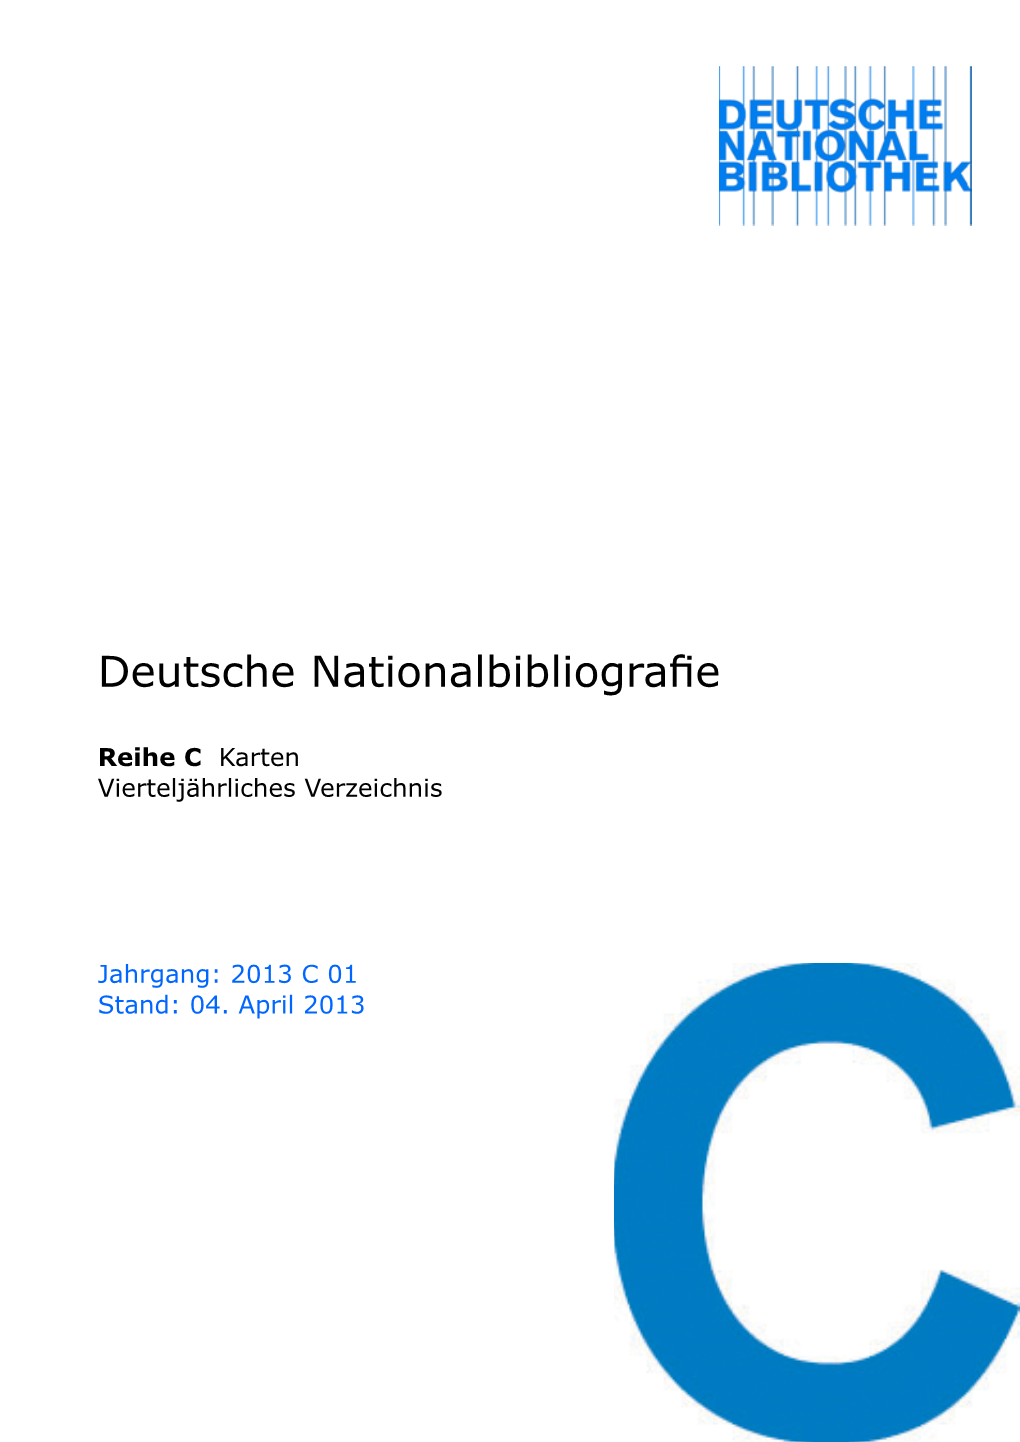 Deutsche Nationalbibliografie 2013 C 01